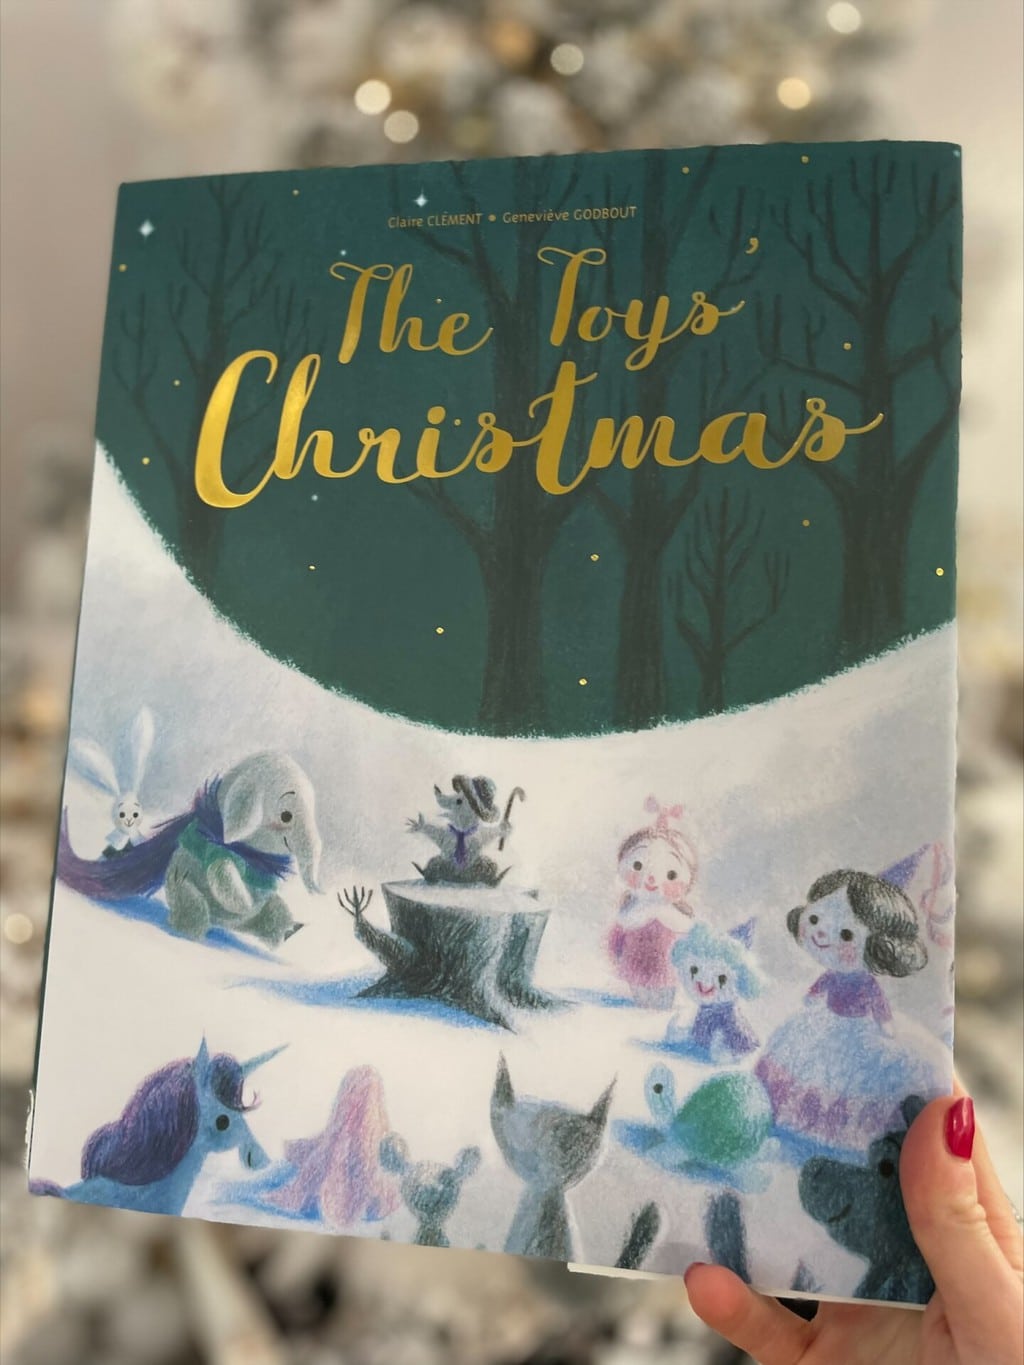 oys’ Christmas – Claire Clement (author), Genevieve Godbout (illustrator), Frances Lincoln Children’s Books (Quarto) (publisher)